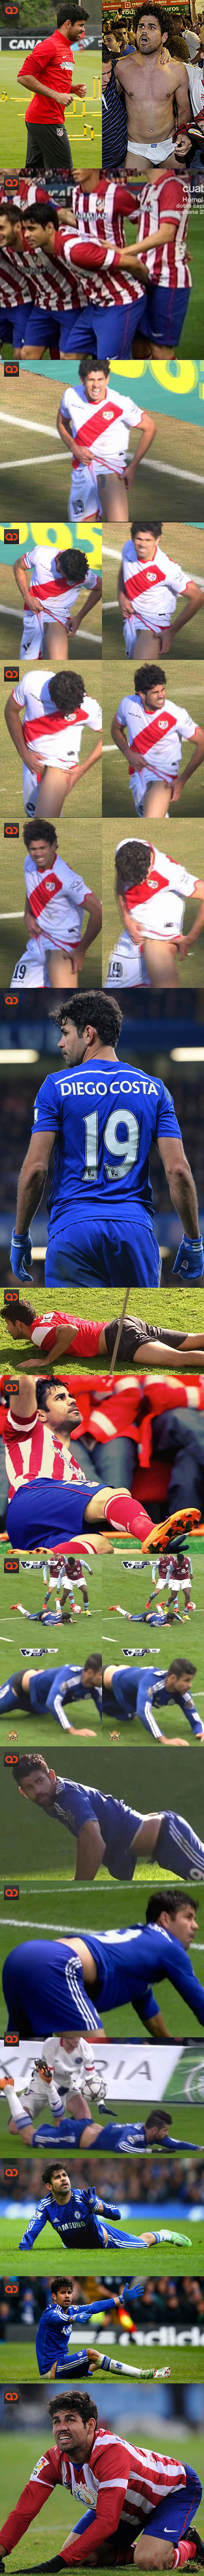 qc-spanish_footballer_diego_costa_bitting_opponent-collage02